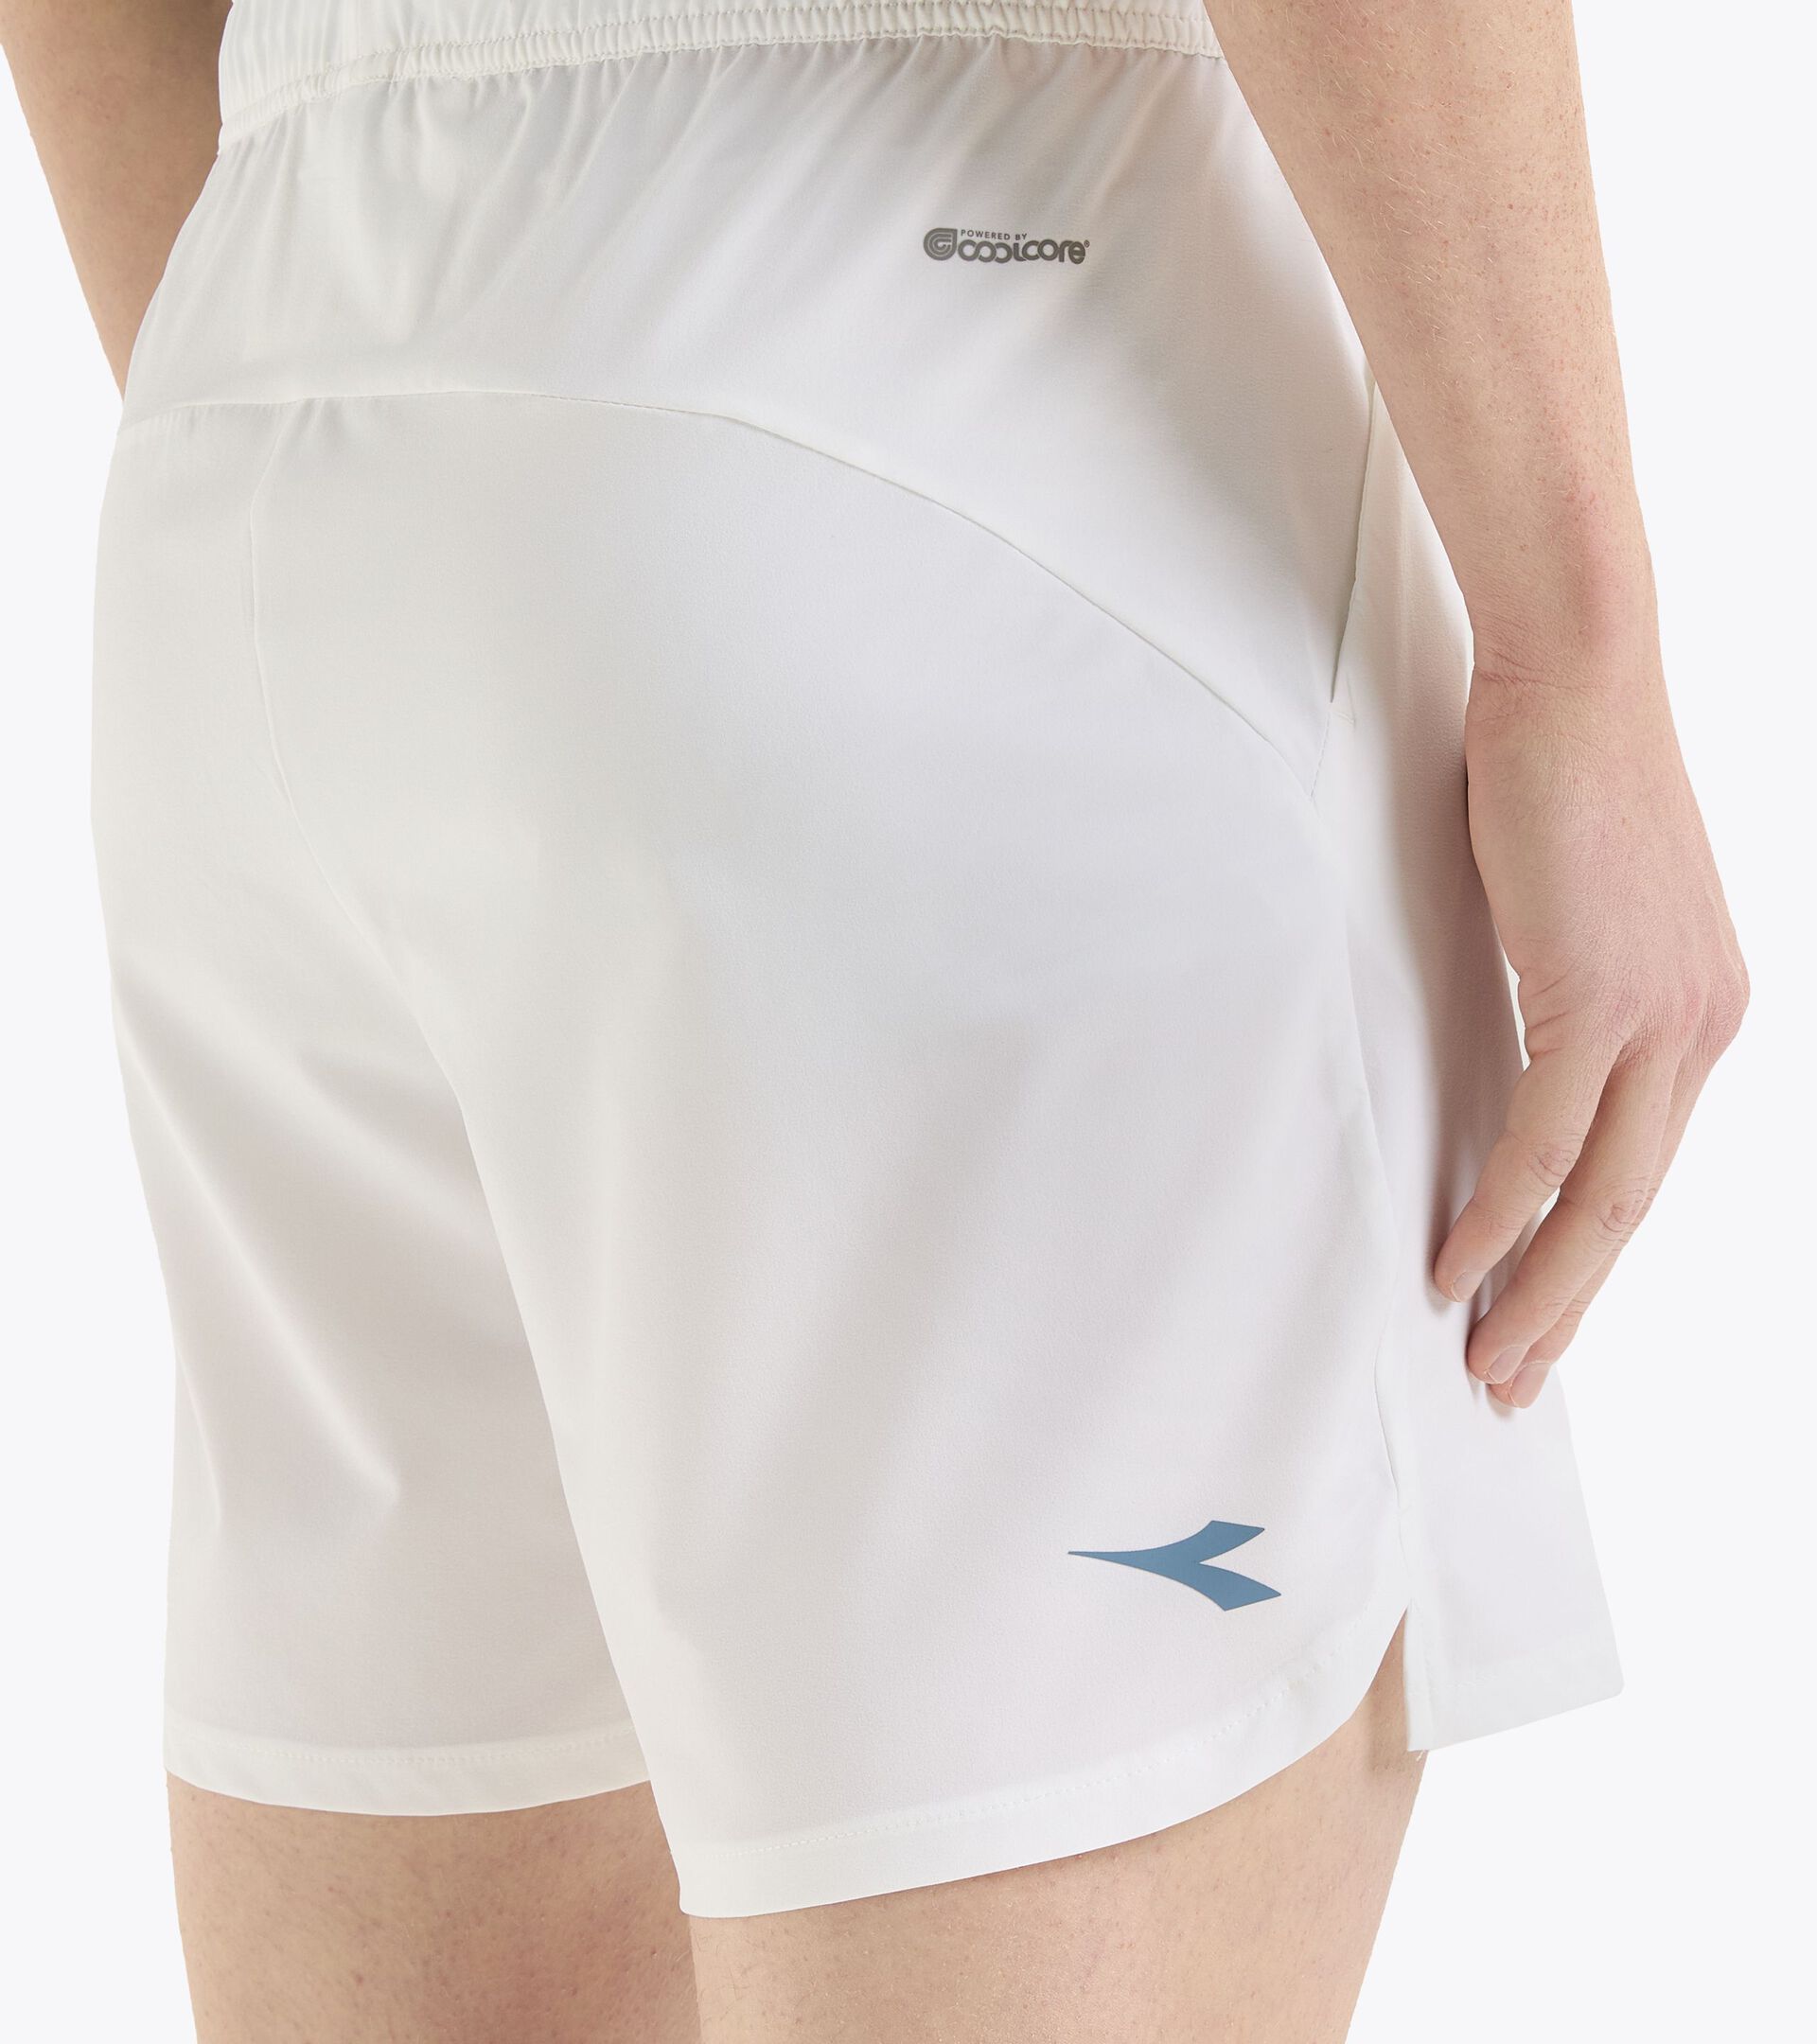 7’’ tennis shorts - Men’s
 SHORTS ICON 7" OPTICAL WHITE - Diadora